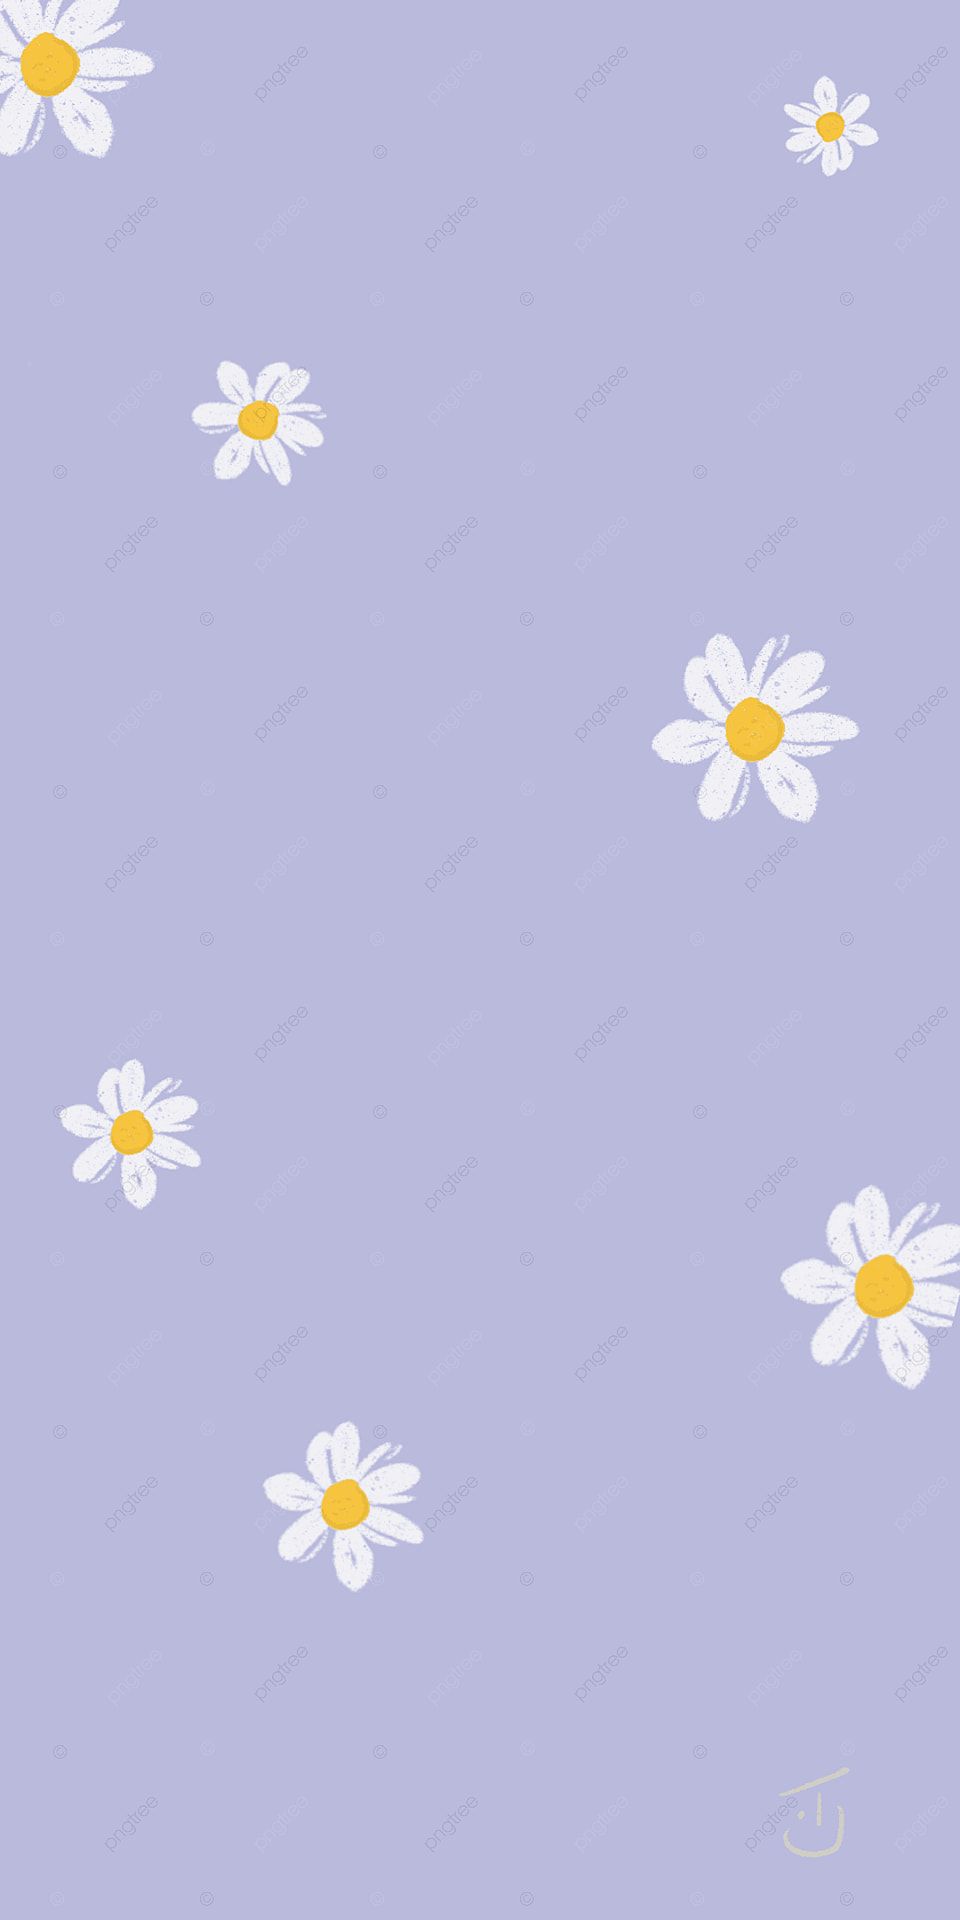 Blooming white daisy flower mobile phone wallpaper vector  premium image  by rawpixelcom  marinemynt  พนหลงวอลลเปเปอรนารก มานฉากหลง  ศลปะความงาม